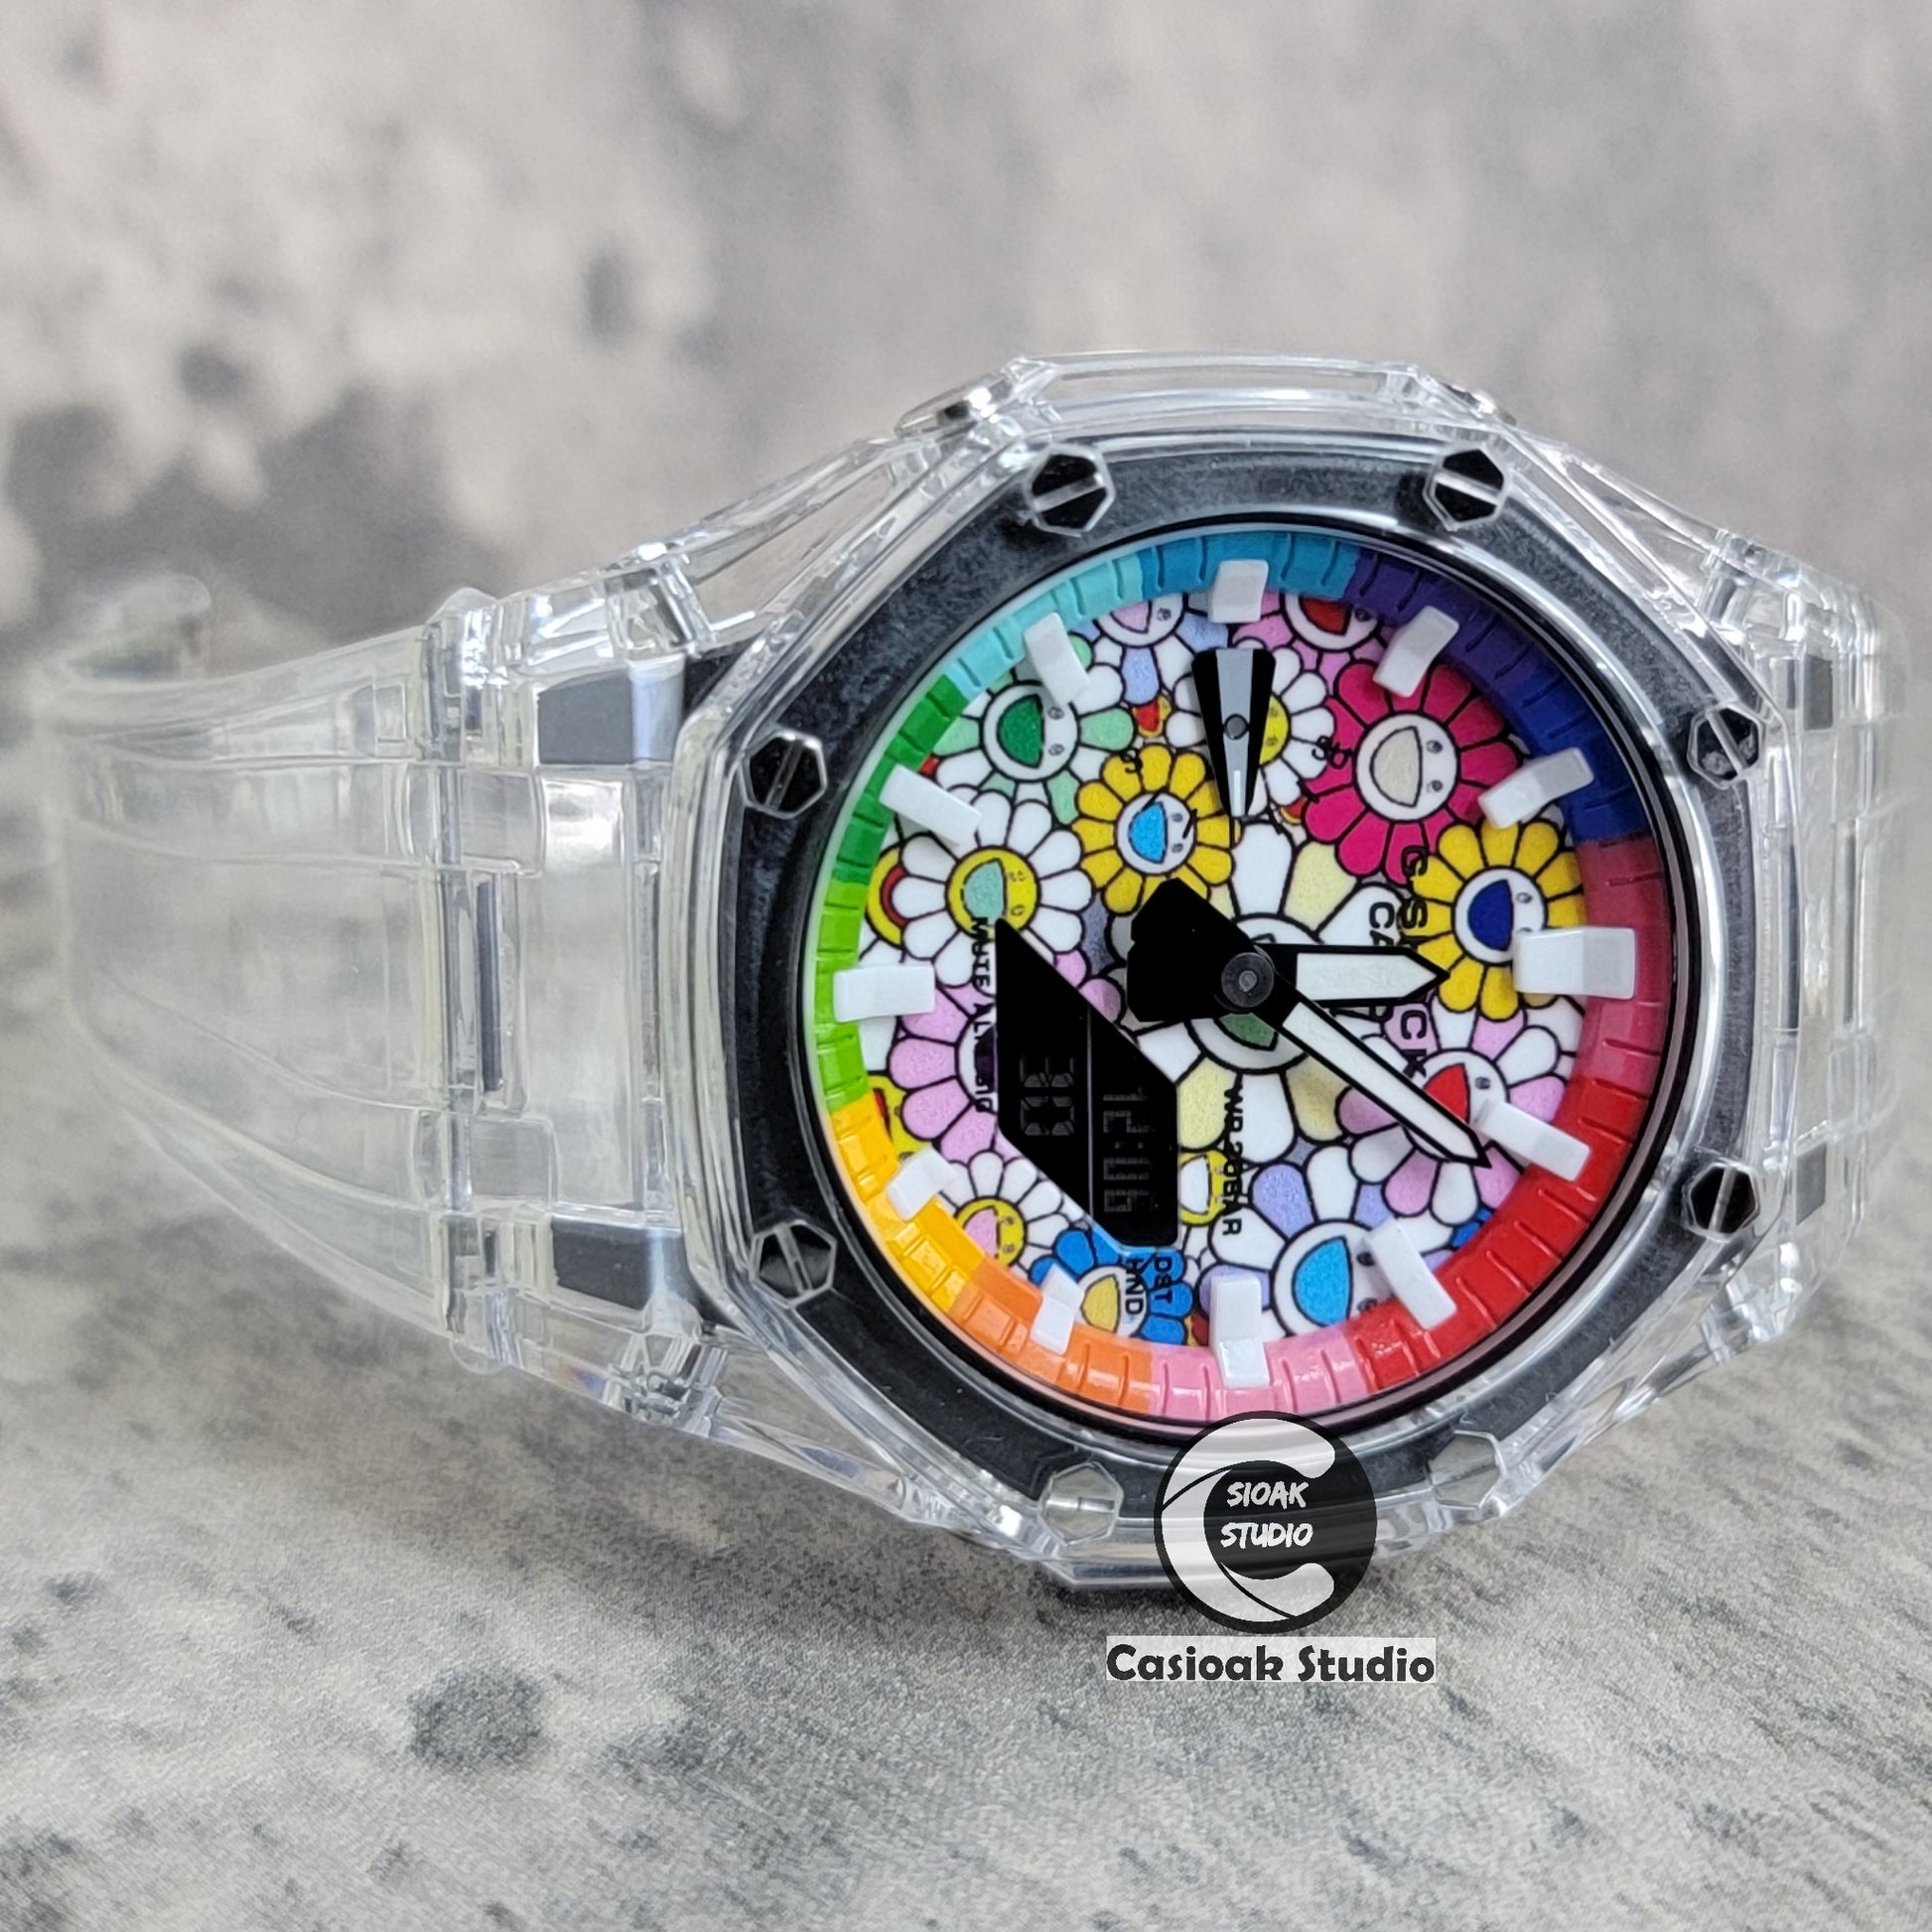 Casioak Mod Watch Transparent Case Transparent Strap Rainbow White Time Mark Takashi Murakami Dial 44mm - Casioak Studio